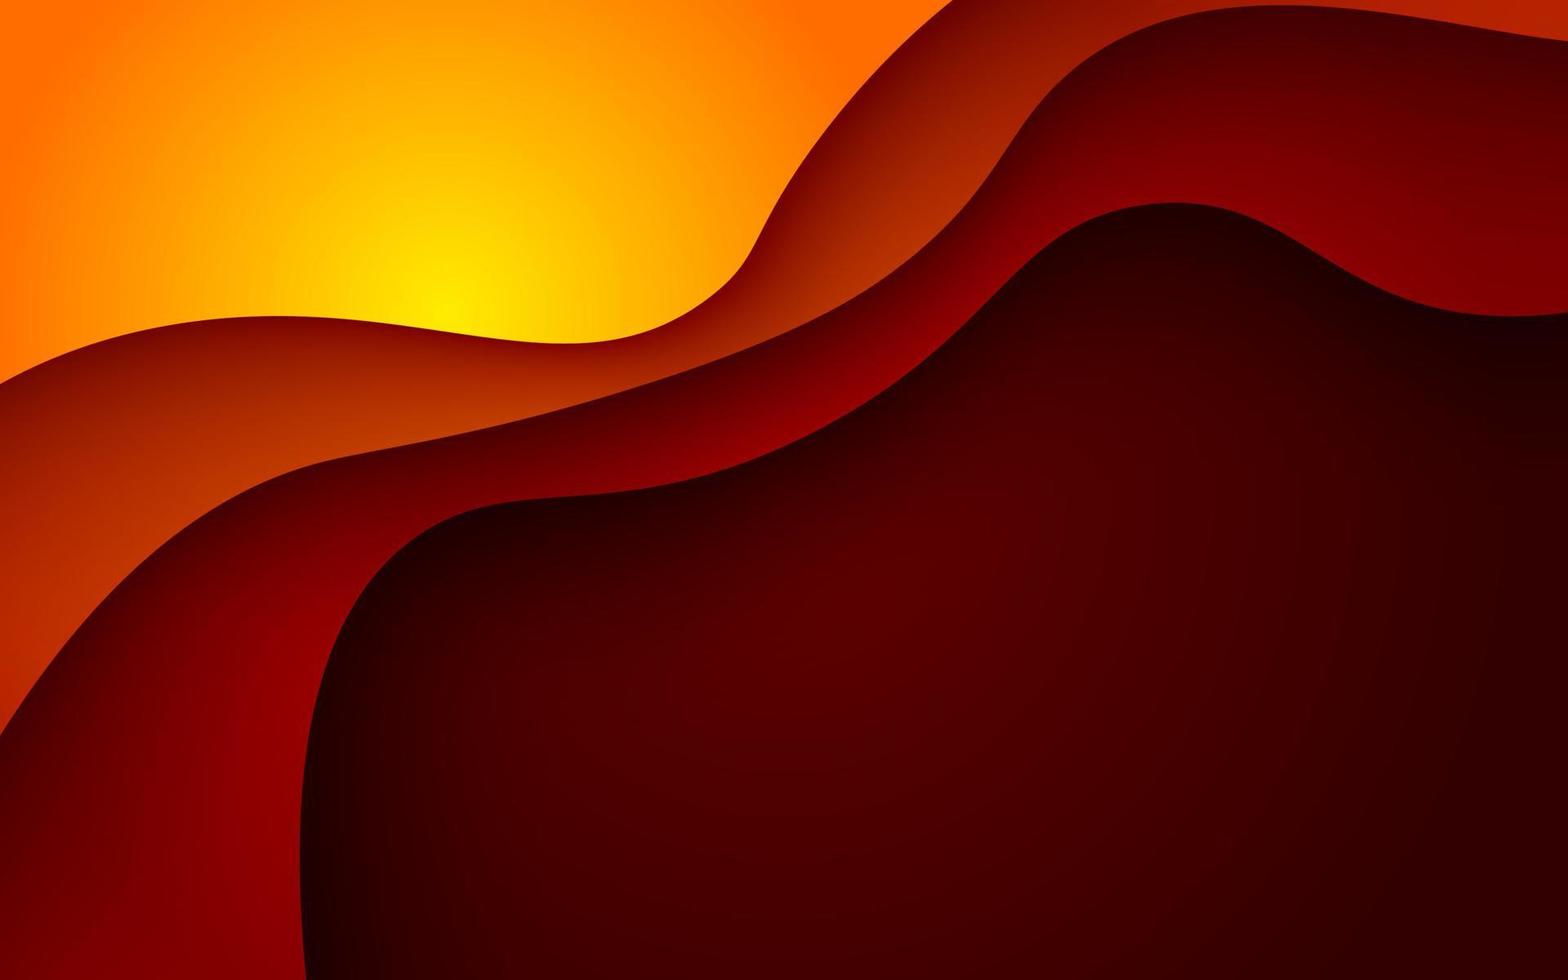 abstract oranje rood helling golvend papercut overlappen lagen achtergrond. eps10 vector